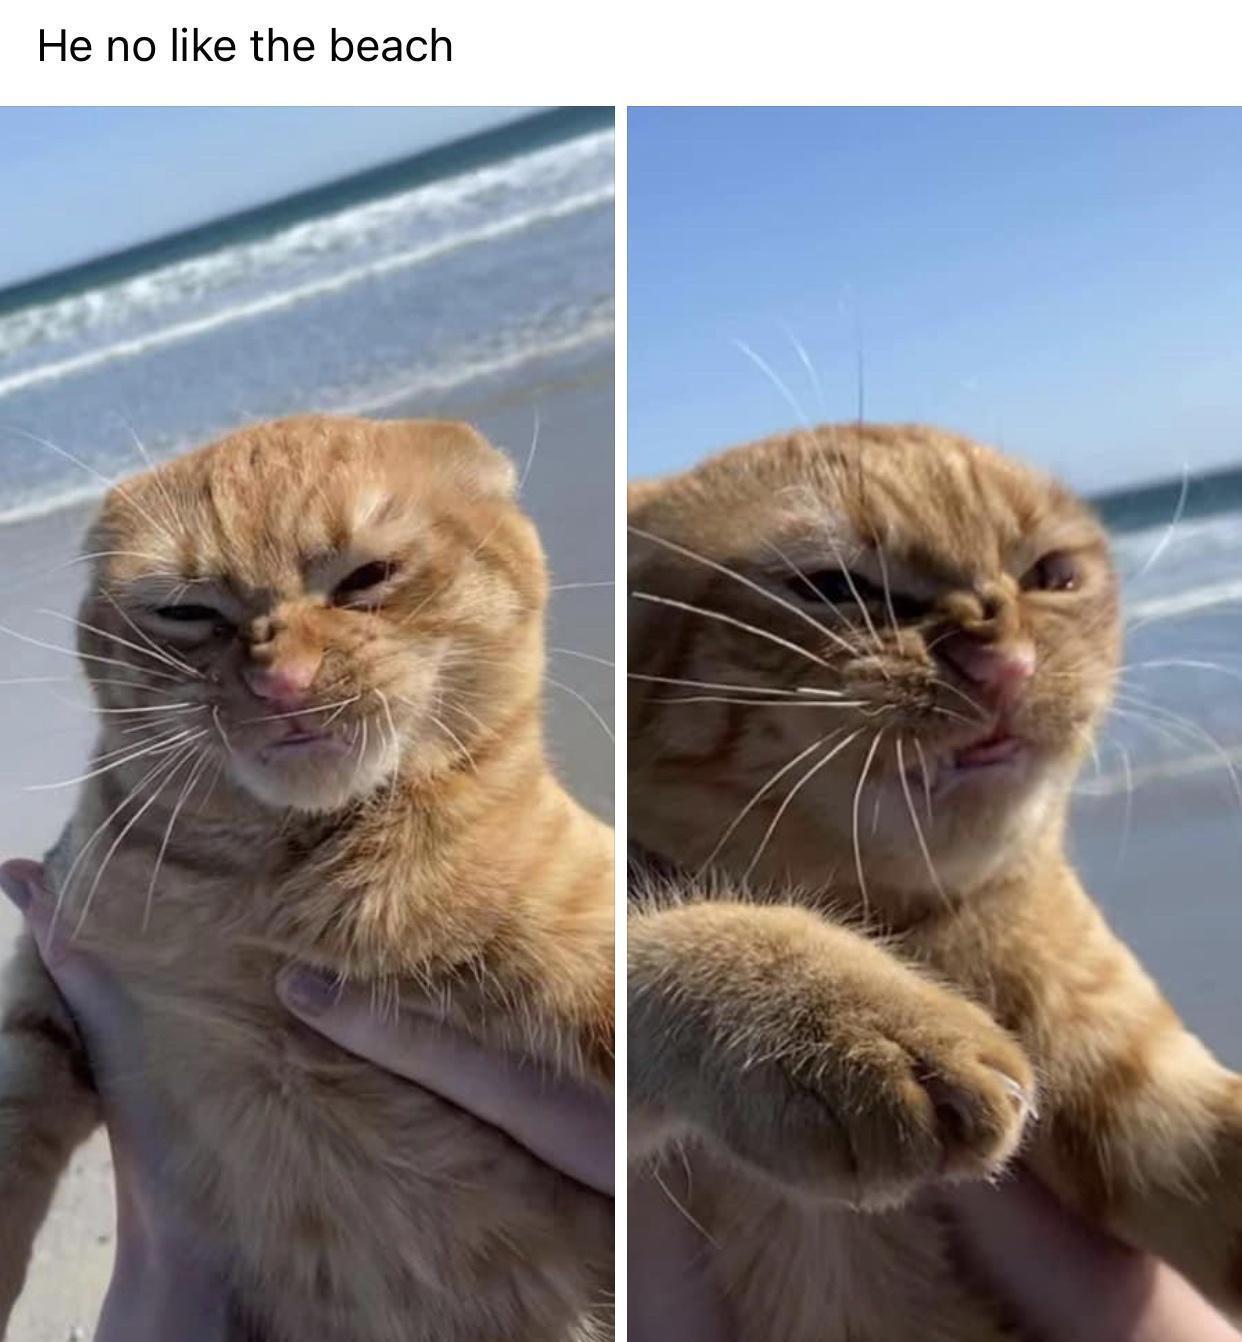 cat on windy beach - He no the beach